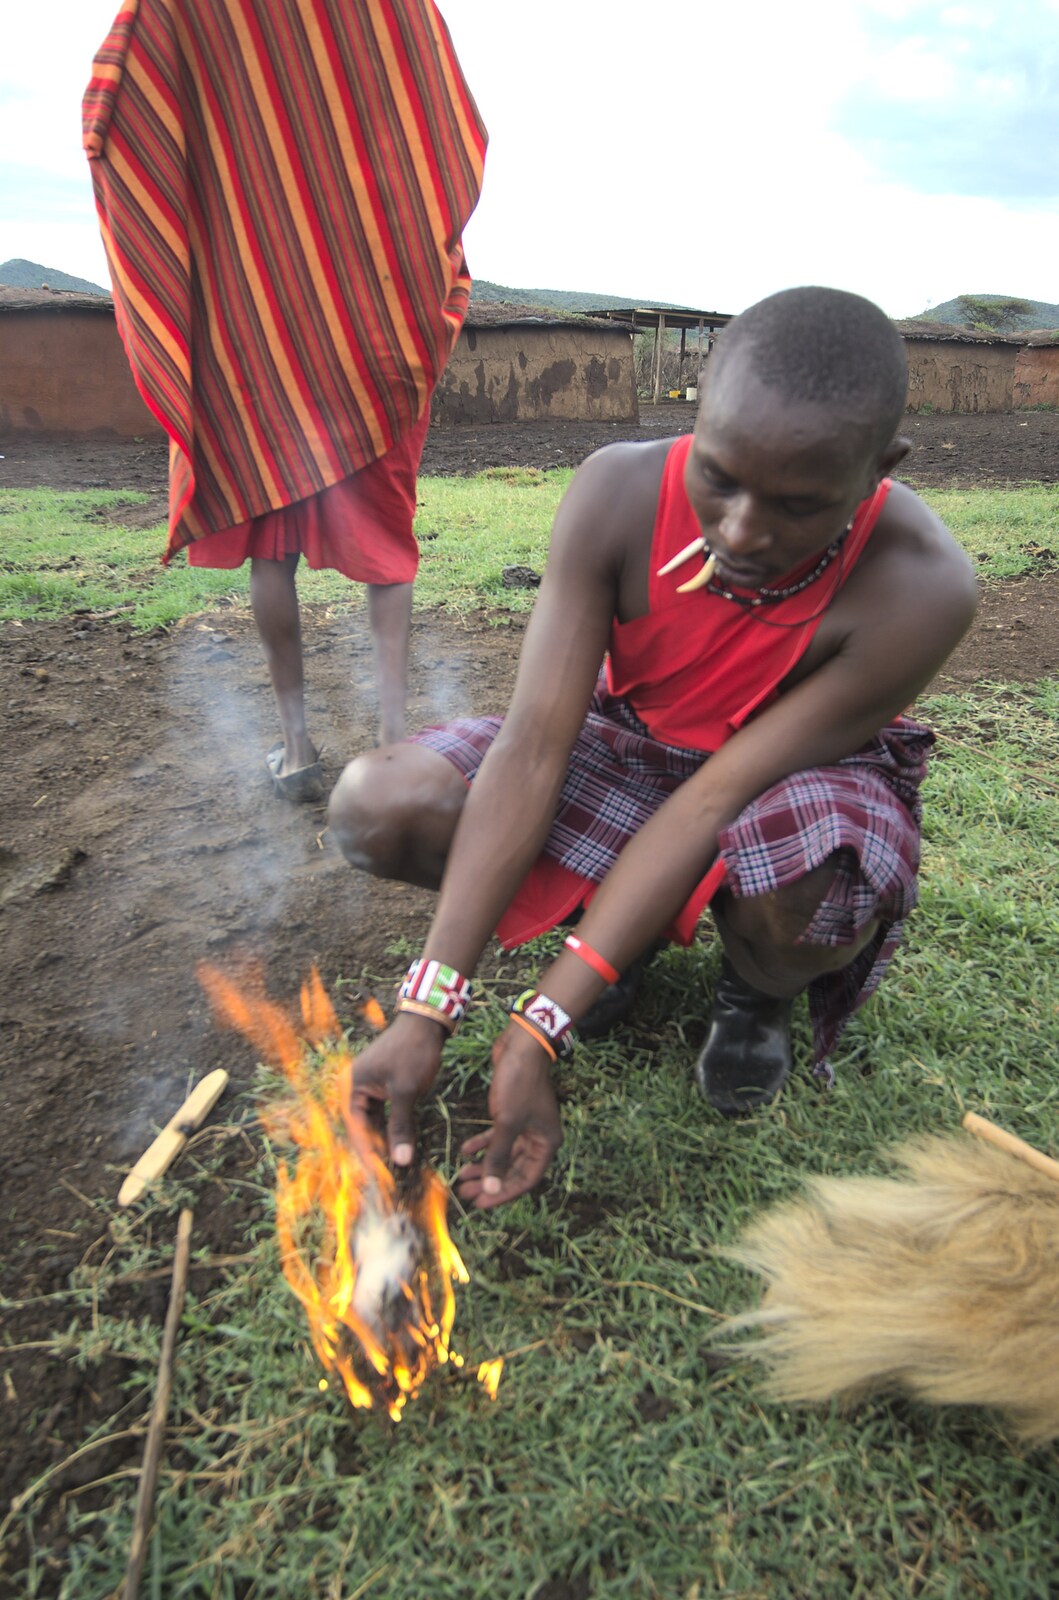 Maasai Mara Safari and a Maasai Village, Ololaimutia, Kenya - 5th November 2010: Fire is created